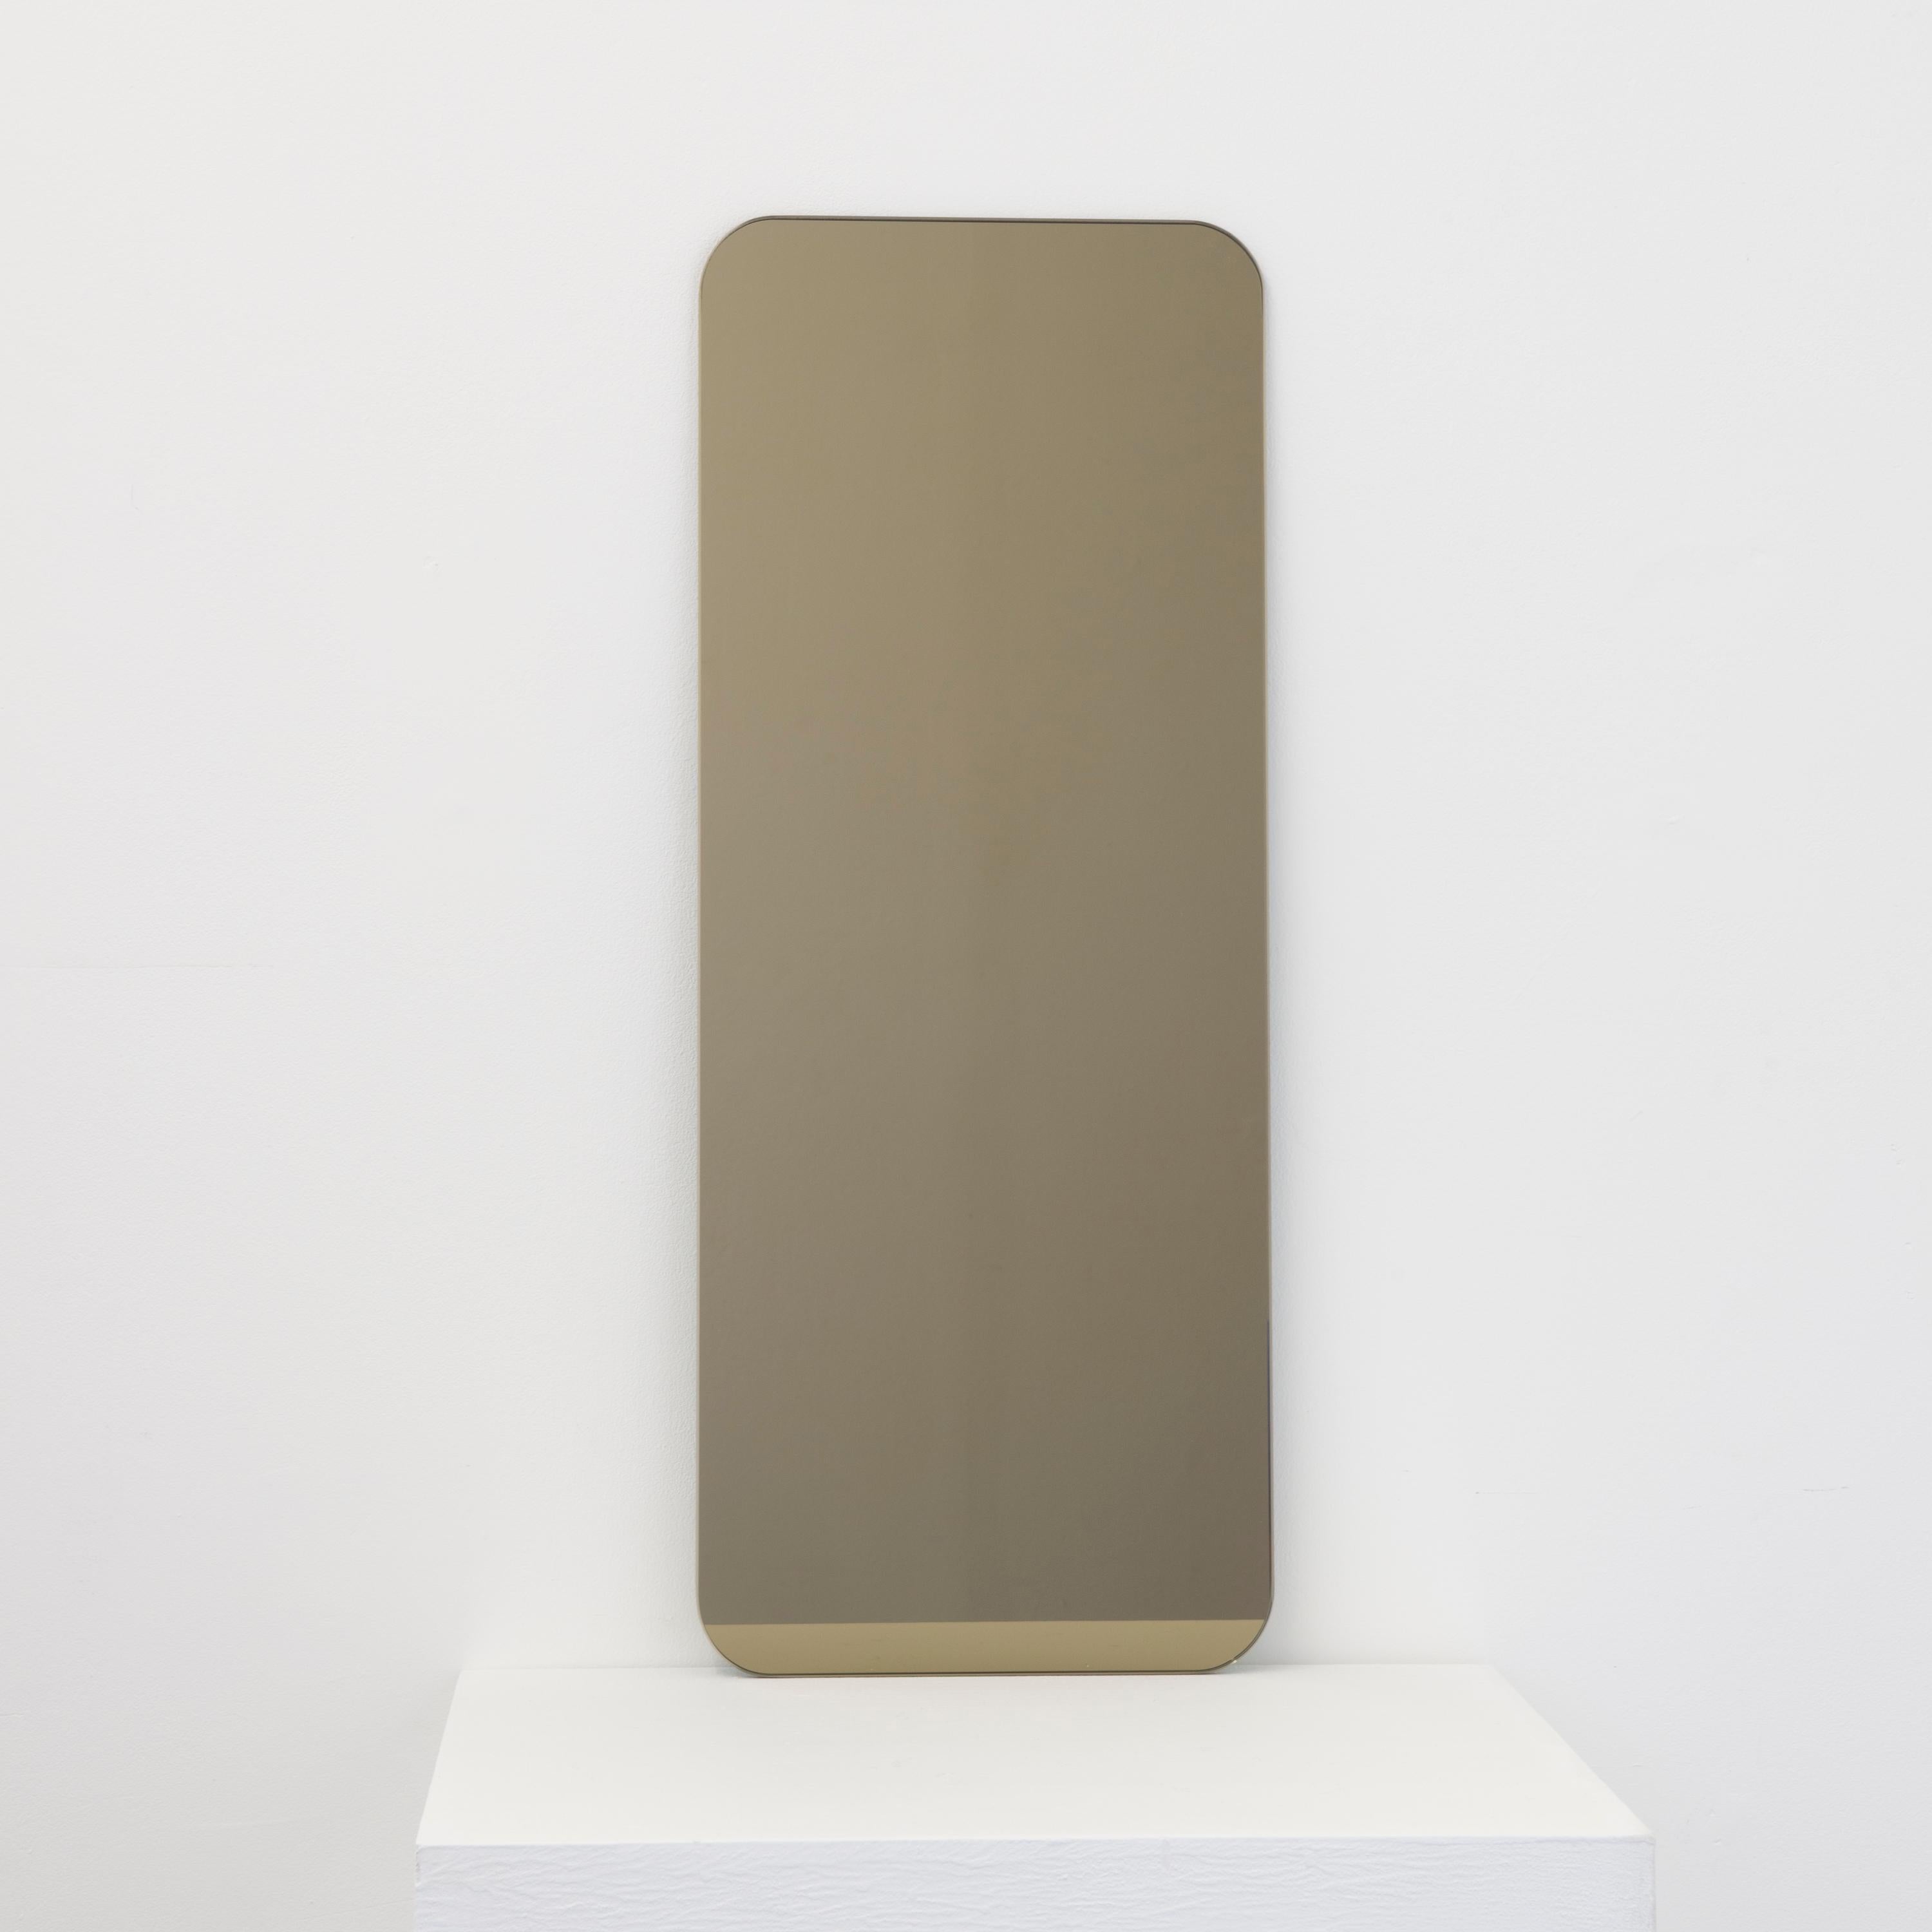 Quadris Bronze Rectangular Frameless Modern Mirror, Medium In New Condition For Sale In London, GB